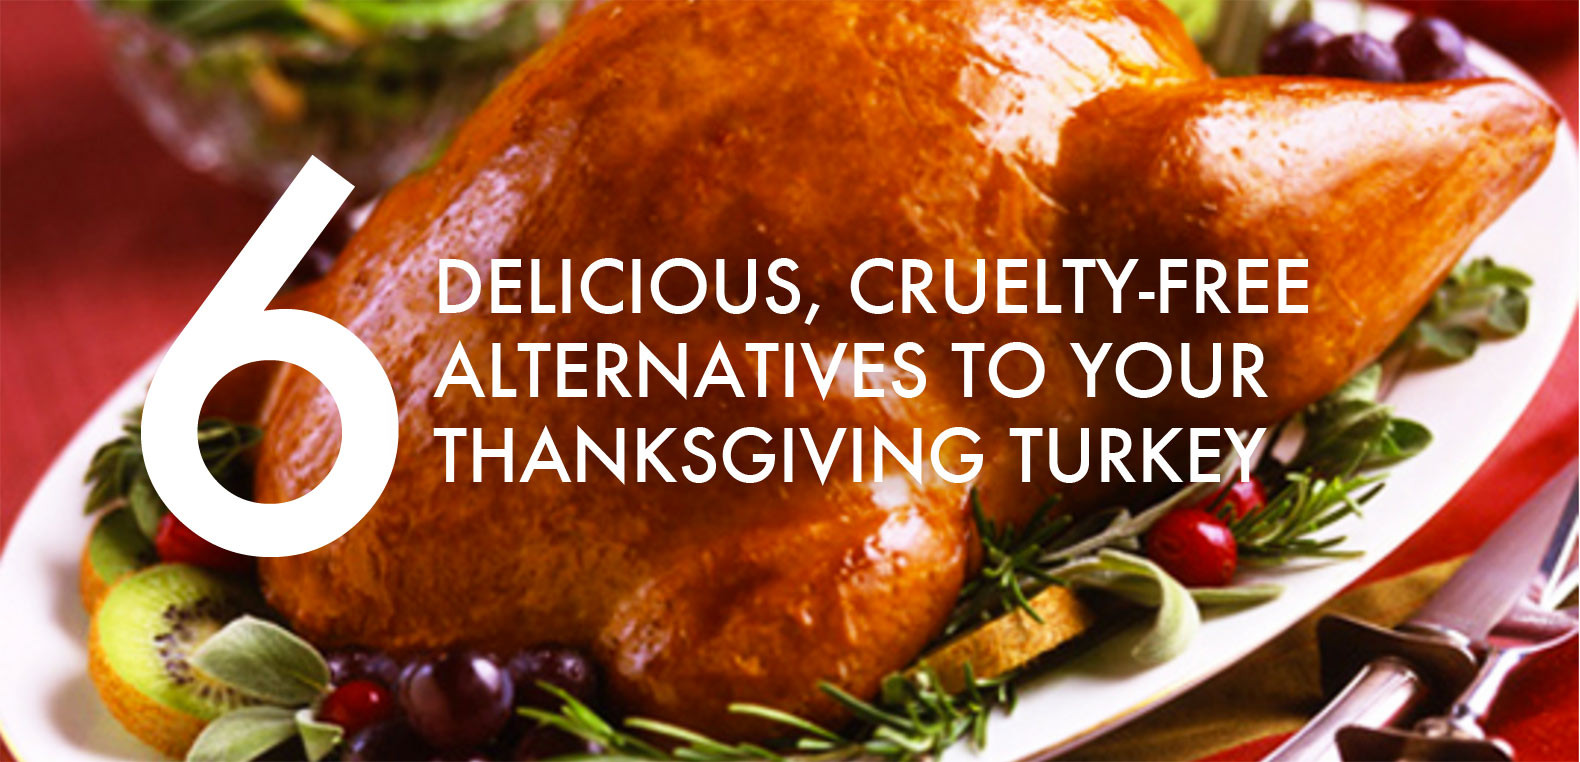 Alternatives To Turkey For Thanksgiving
 6 Vegan and ve arian turkey alternatives for